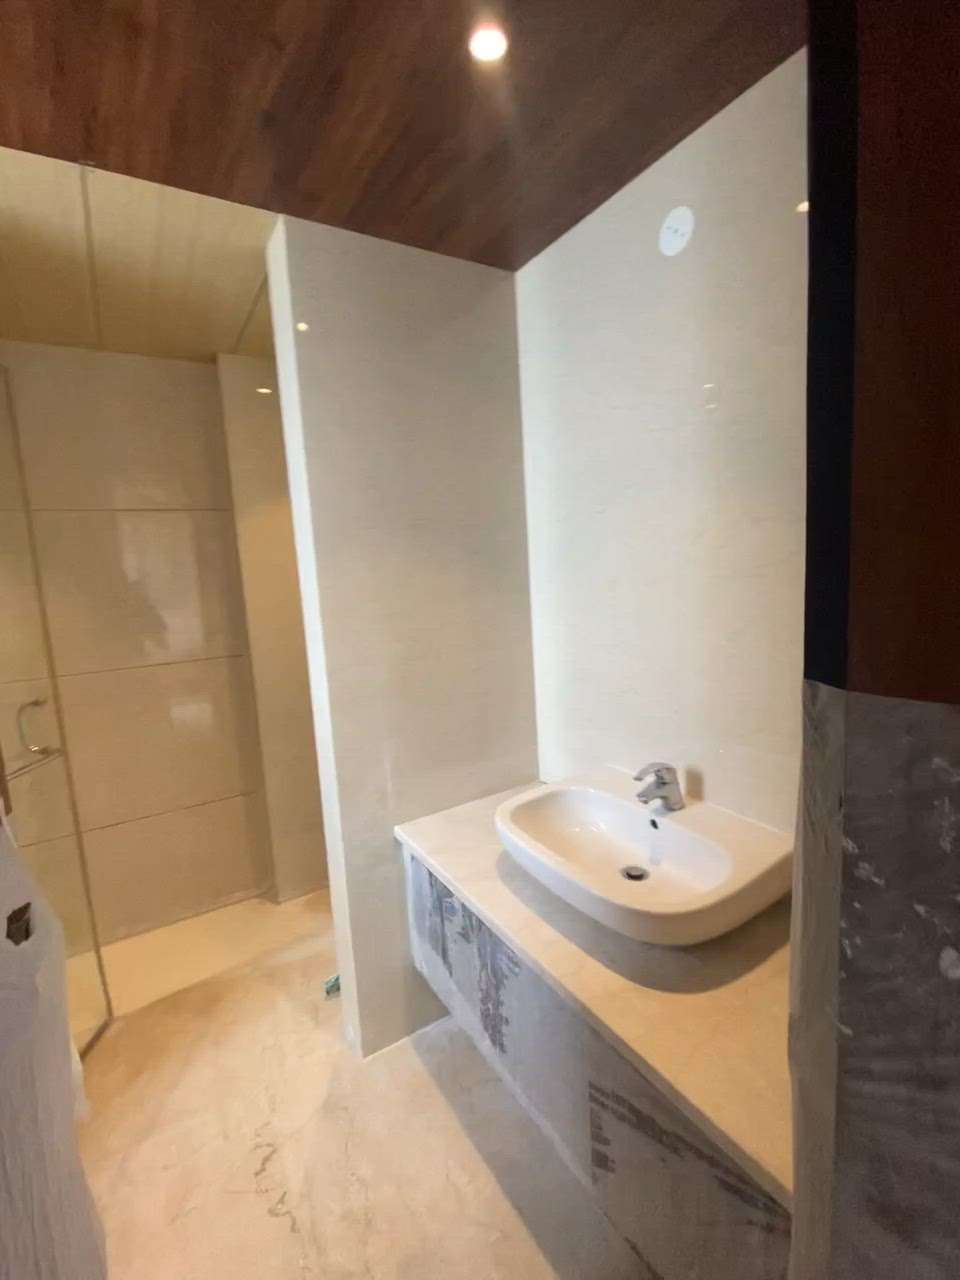 Bathroom with HPL false ceiling 
#bathroomdesign#hplfalseceiling#interiorarchitecture#tiles#residential#delhiinteriors#luxuryinteriors#construction